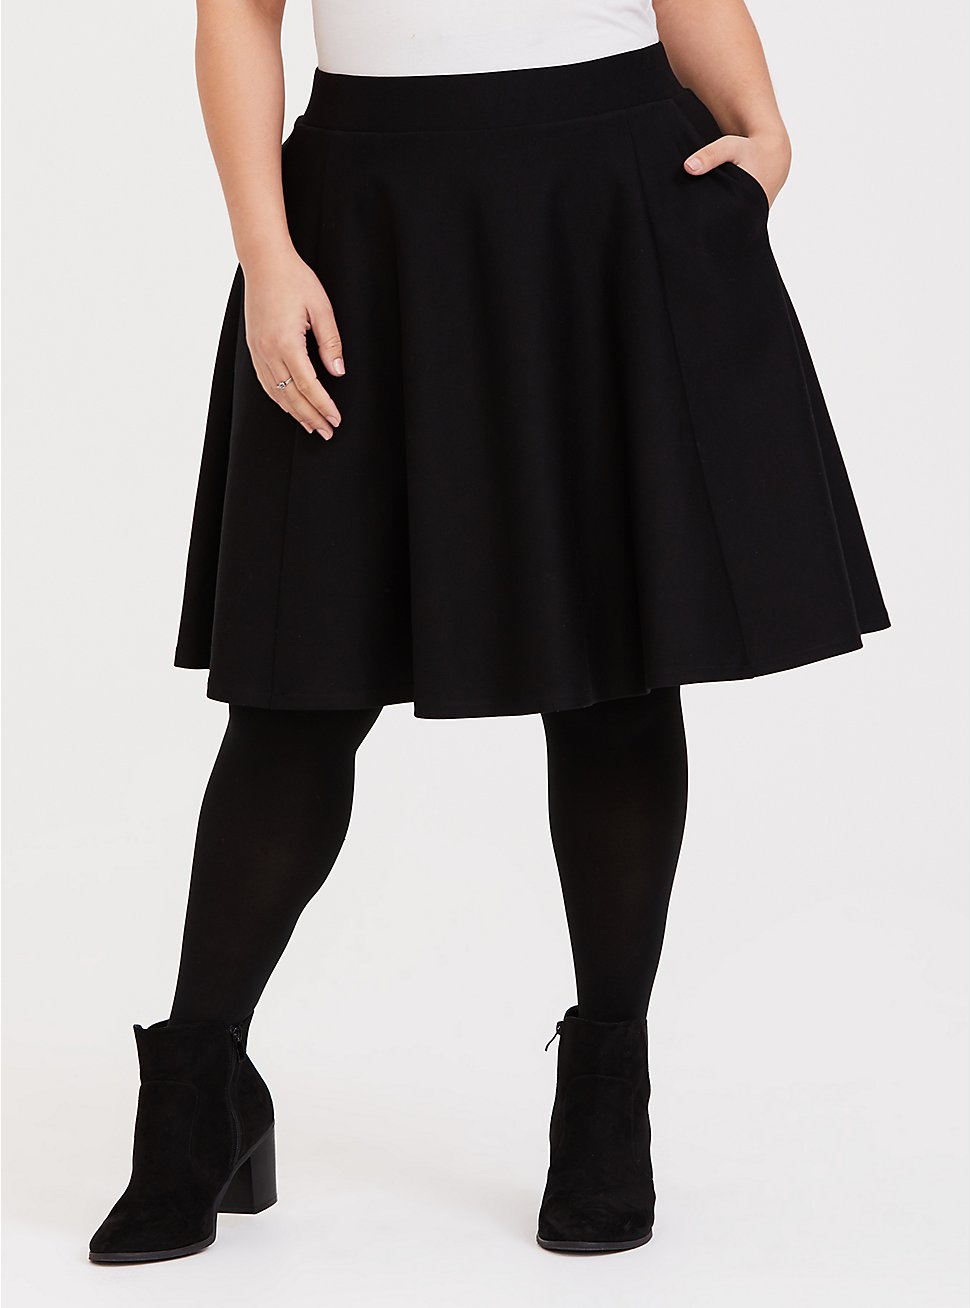 Plus Size - Black Premium Ponte A-Line Skirt - Torrid